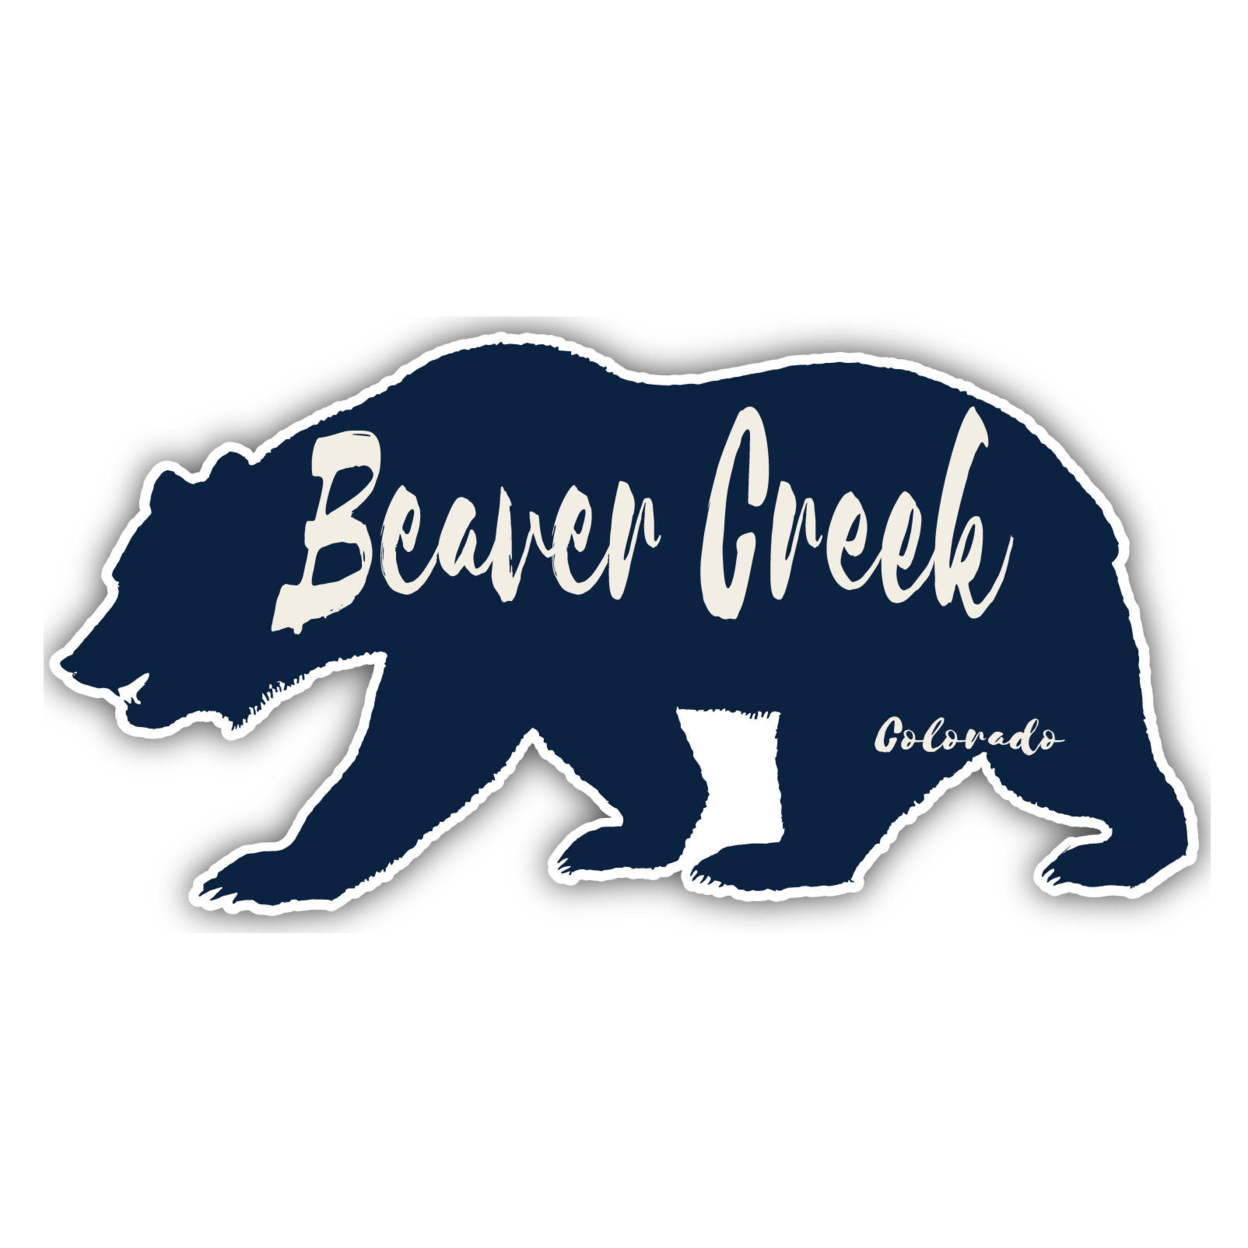 Beaver Creek Colorado Souvenir Decorative Stickers (Choose Theme And Size) - Single Unit, 6-Inch, Bear